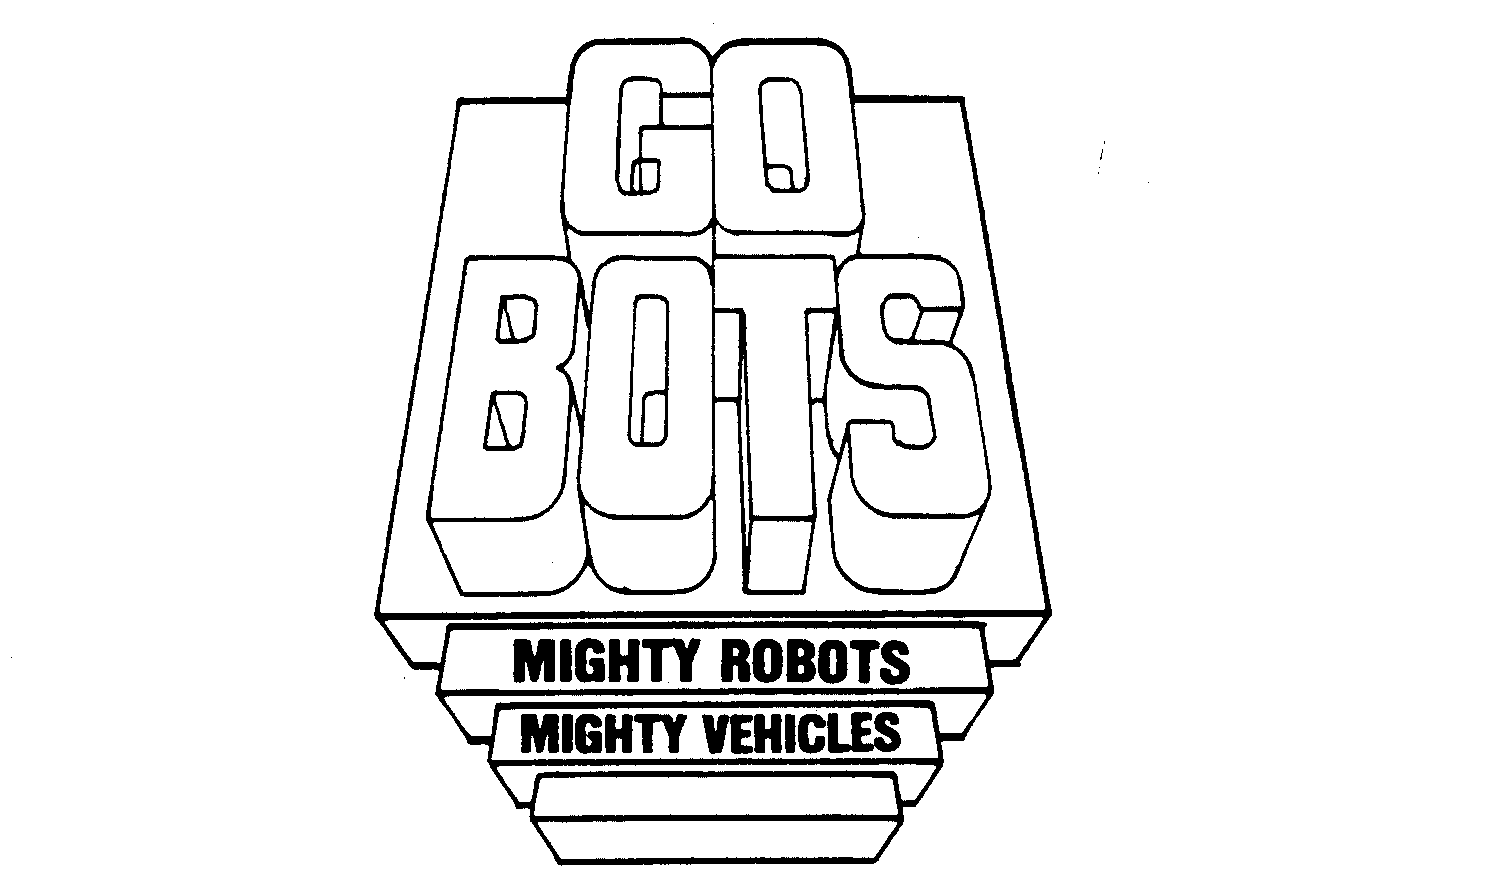  GO BOTS MIGHTY ROBOTS MIGHTY VEHICLES